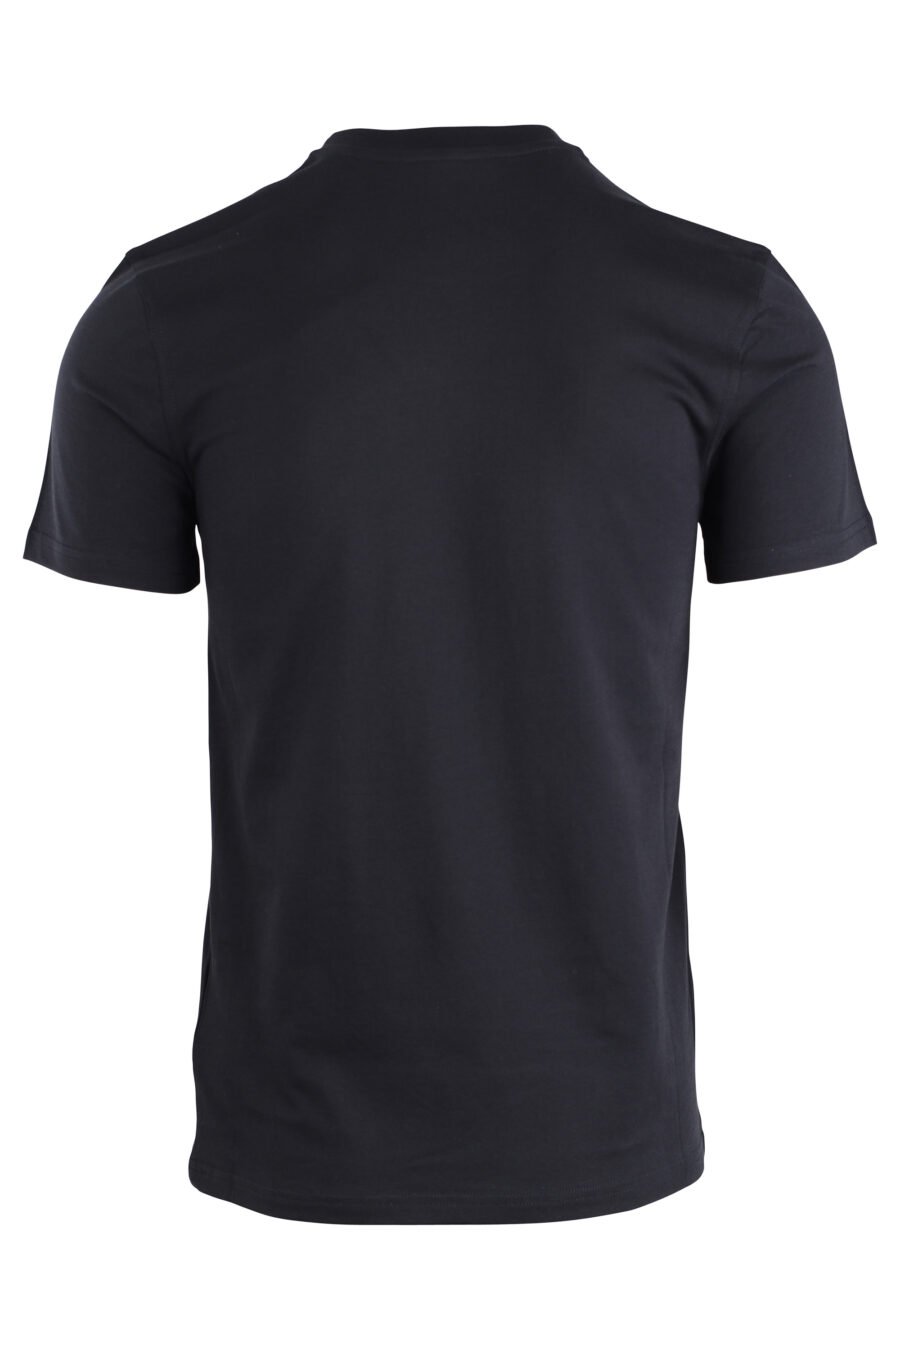 Camiseta negra con minilogo oso monocromático - IMG 1671